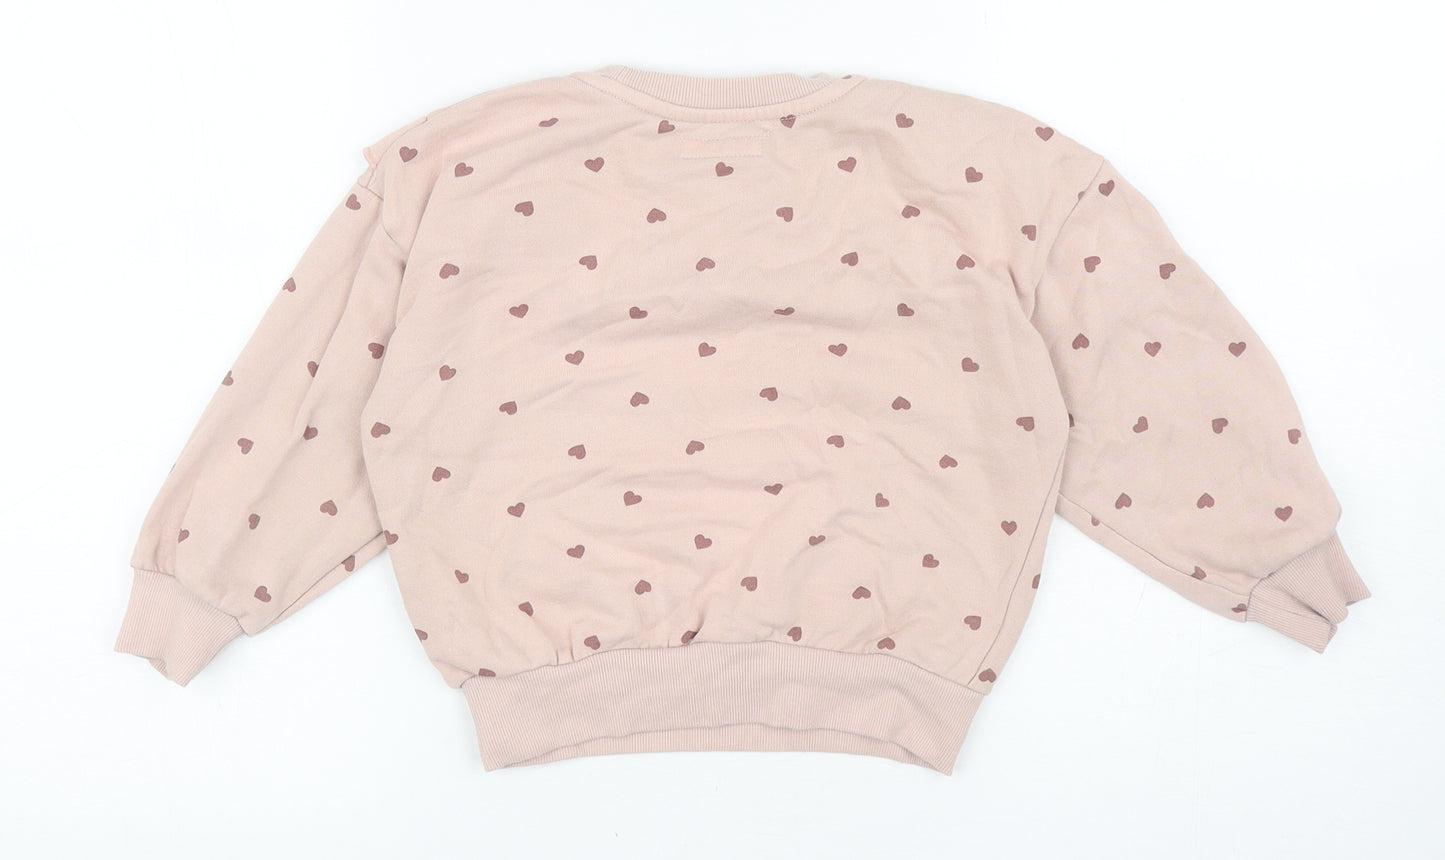 Primark Girls Pink Geometric Cotton Pullover Sweatshirt Size 4-5 Years Pullover - Heart Pattern